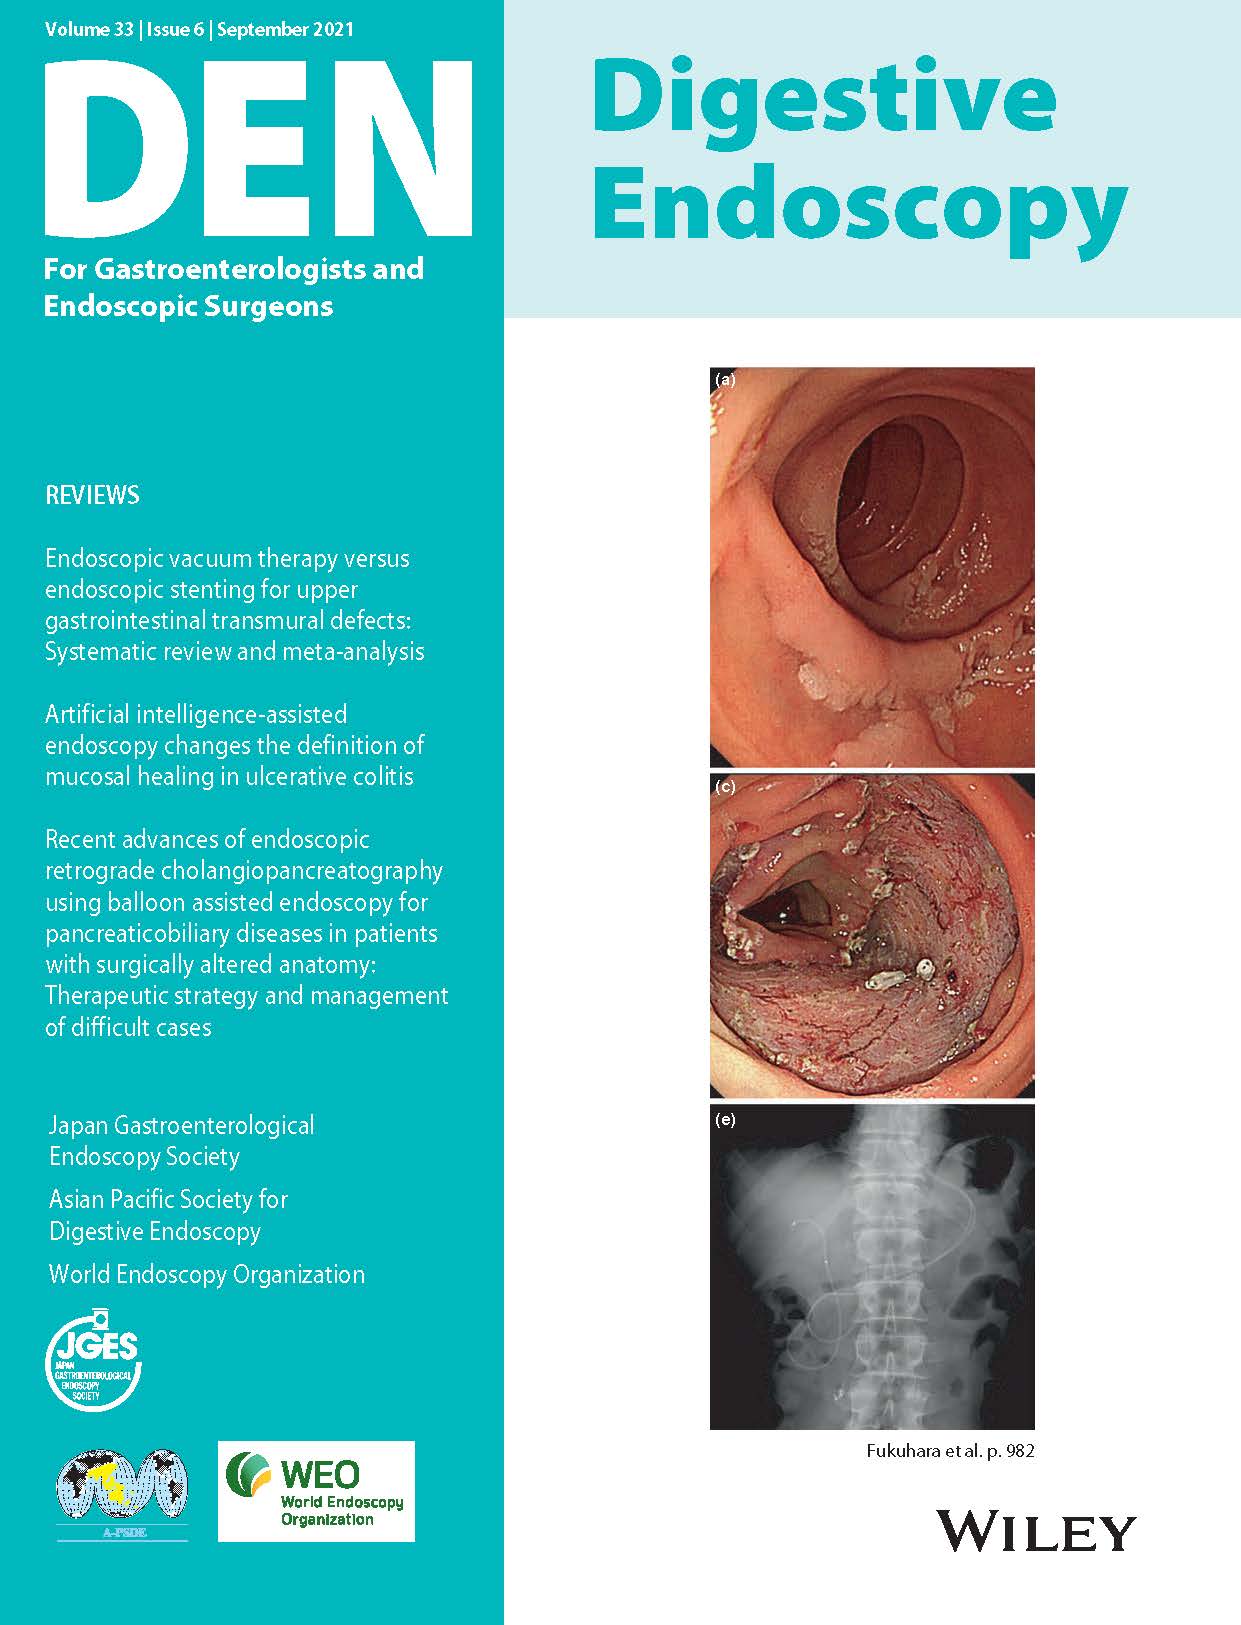 Digestive Endoscopy Vol33-6